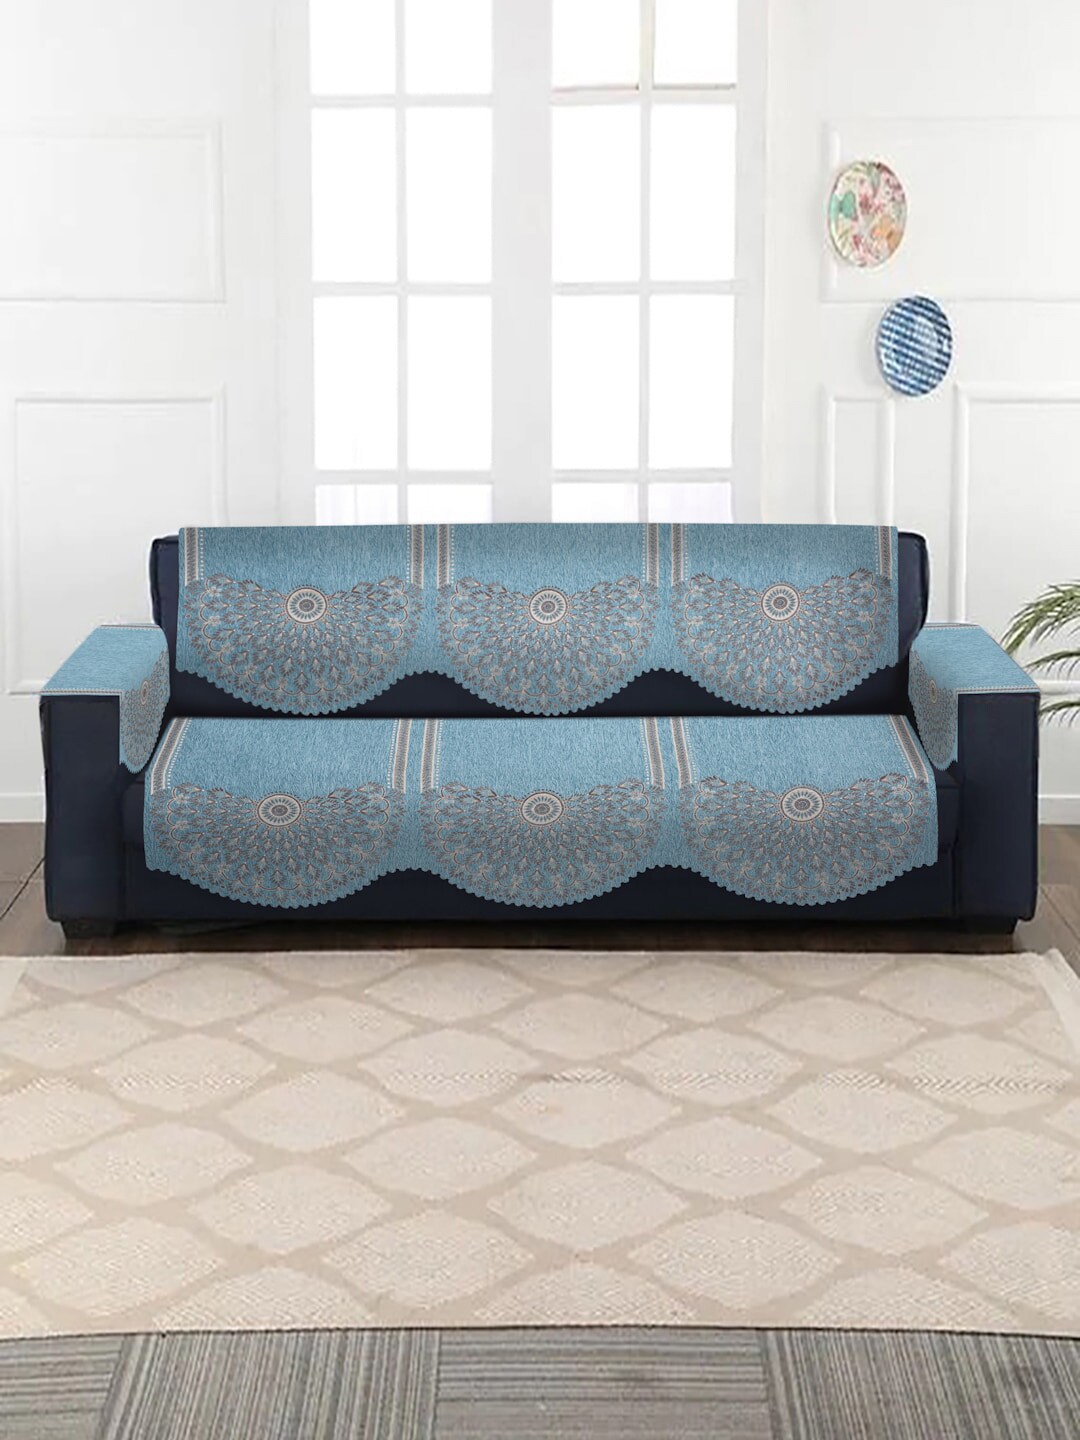 HOSTA HOMES Blue Self Design Jacquard 3 Seater Sofa Cover Price in India